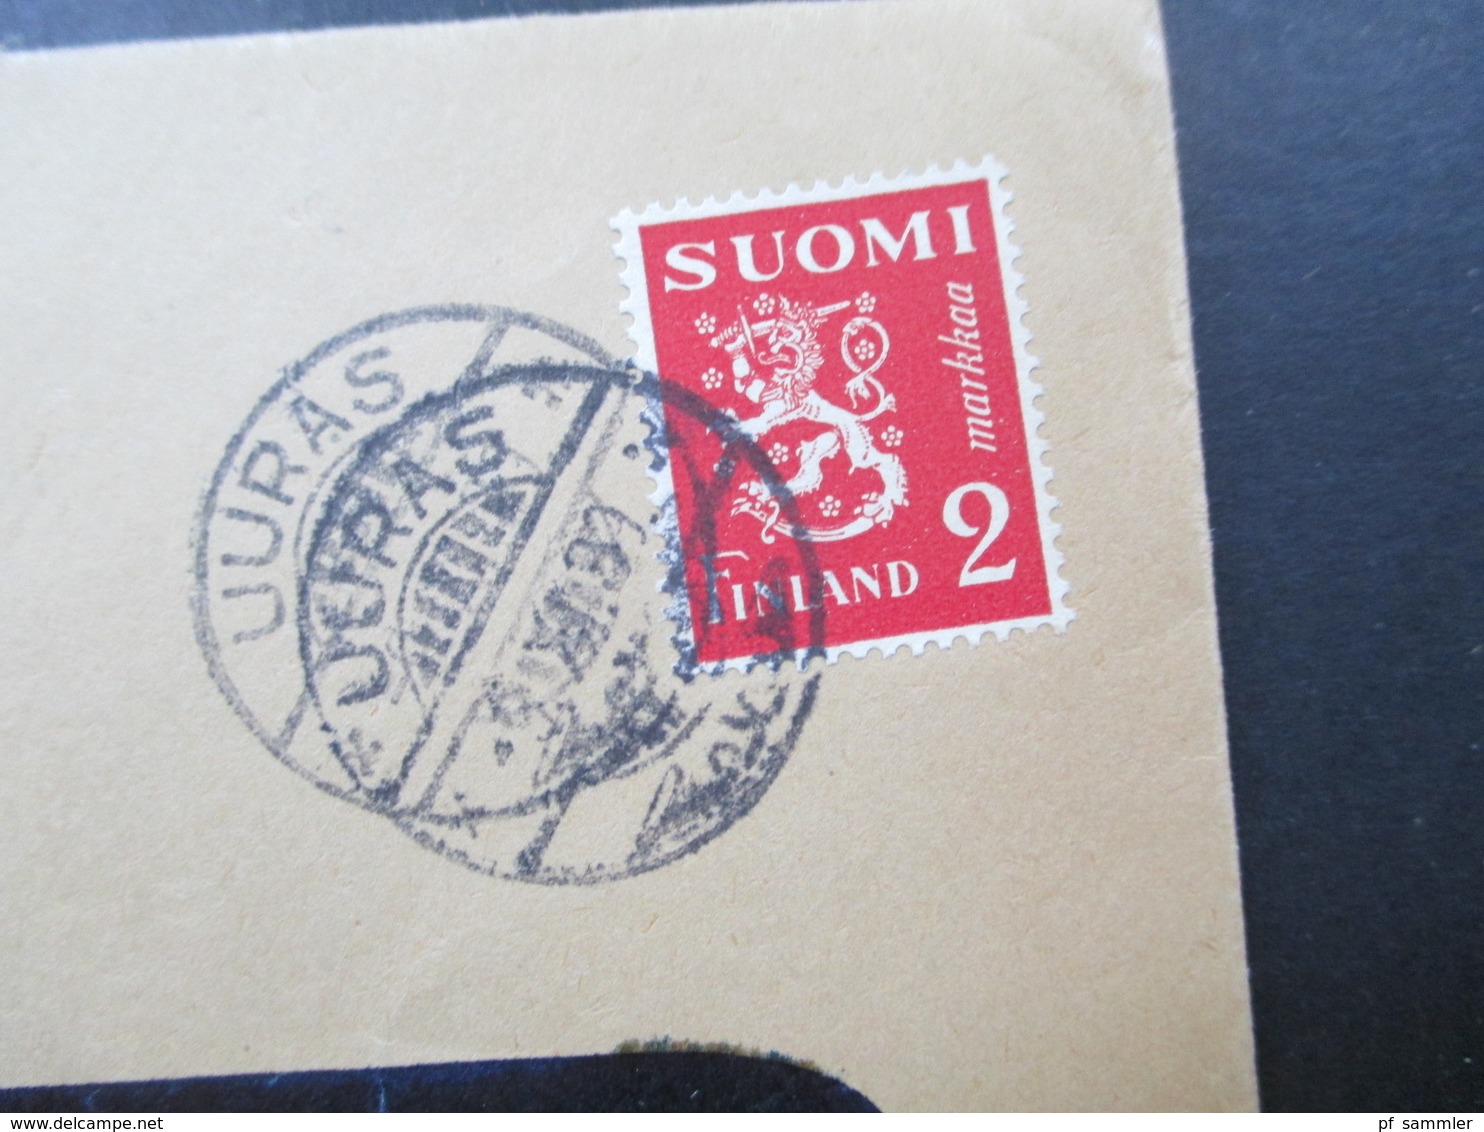 Finnland 1939 A.Ahlström Osakeyhtiö Uuras Trangsund Violetter Stempel Tarkastettu 20.1o.39 Ann. Asetuksen No 348 Nojalla - Storia Postale